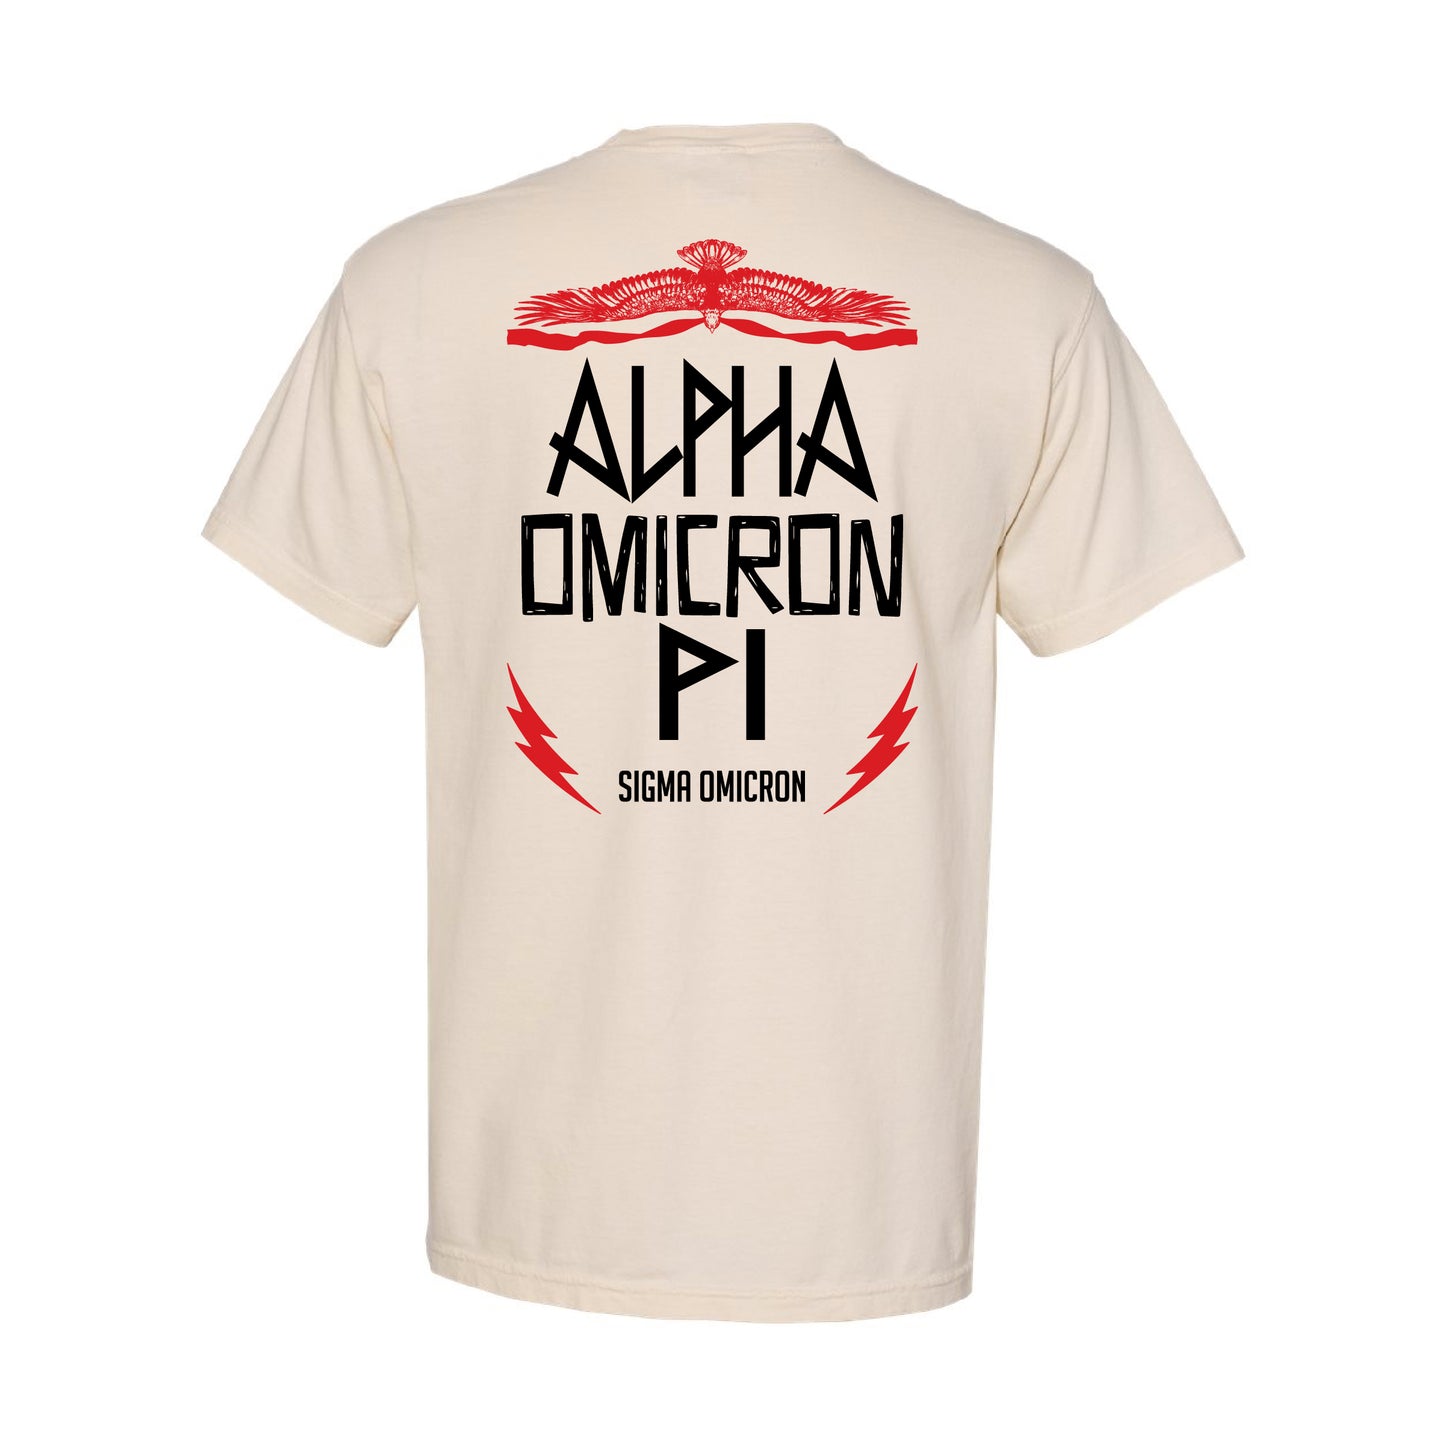 Alpha Omicron Pi - Free Bird - PI 20833